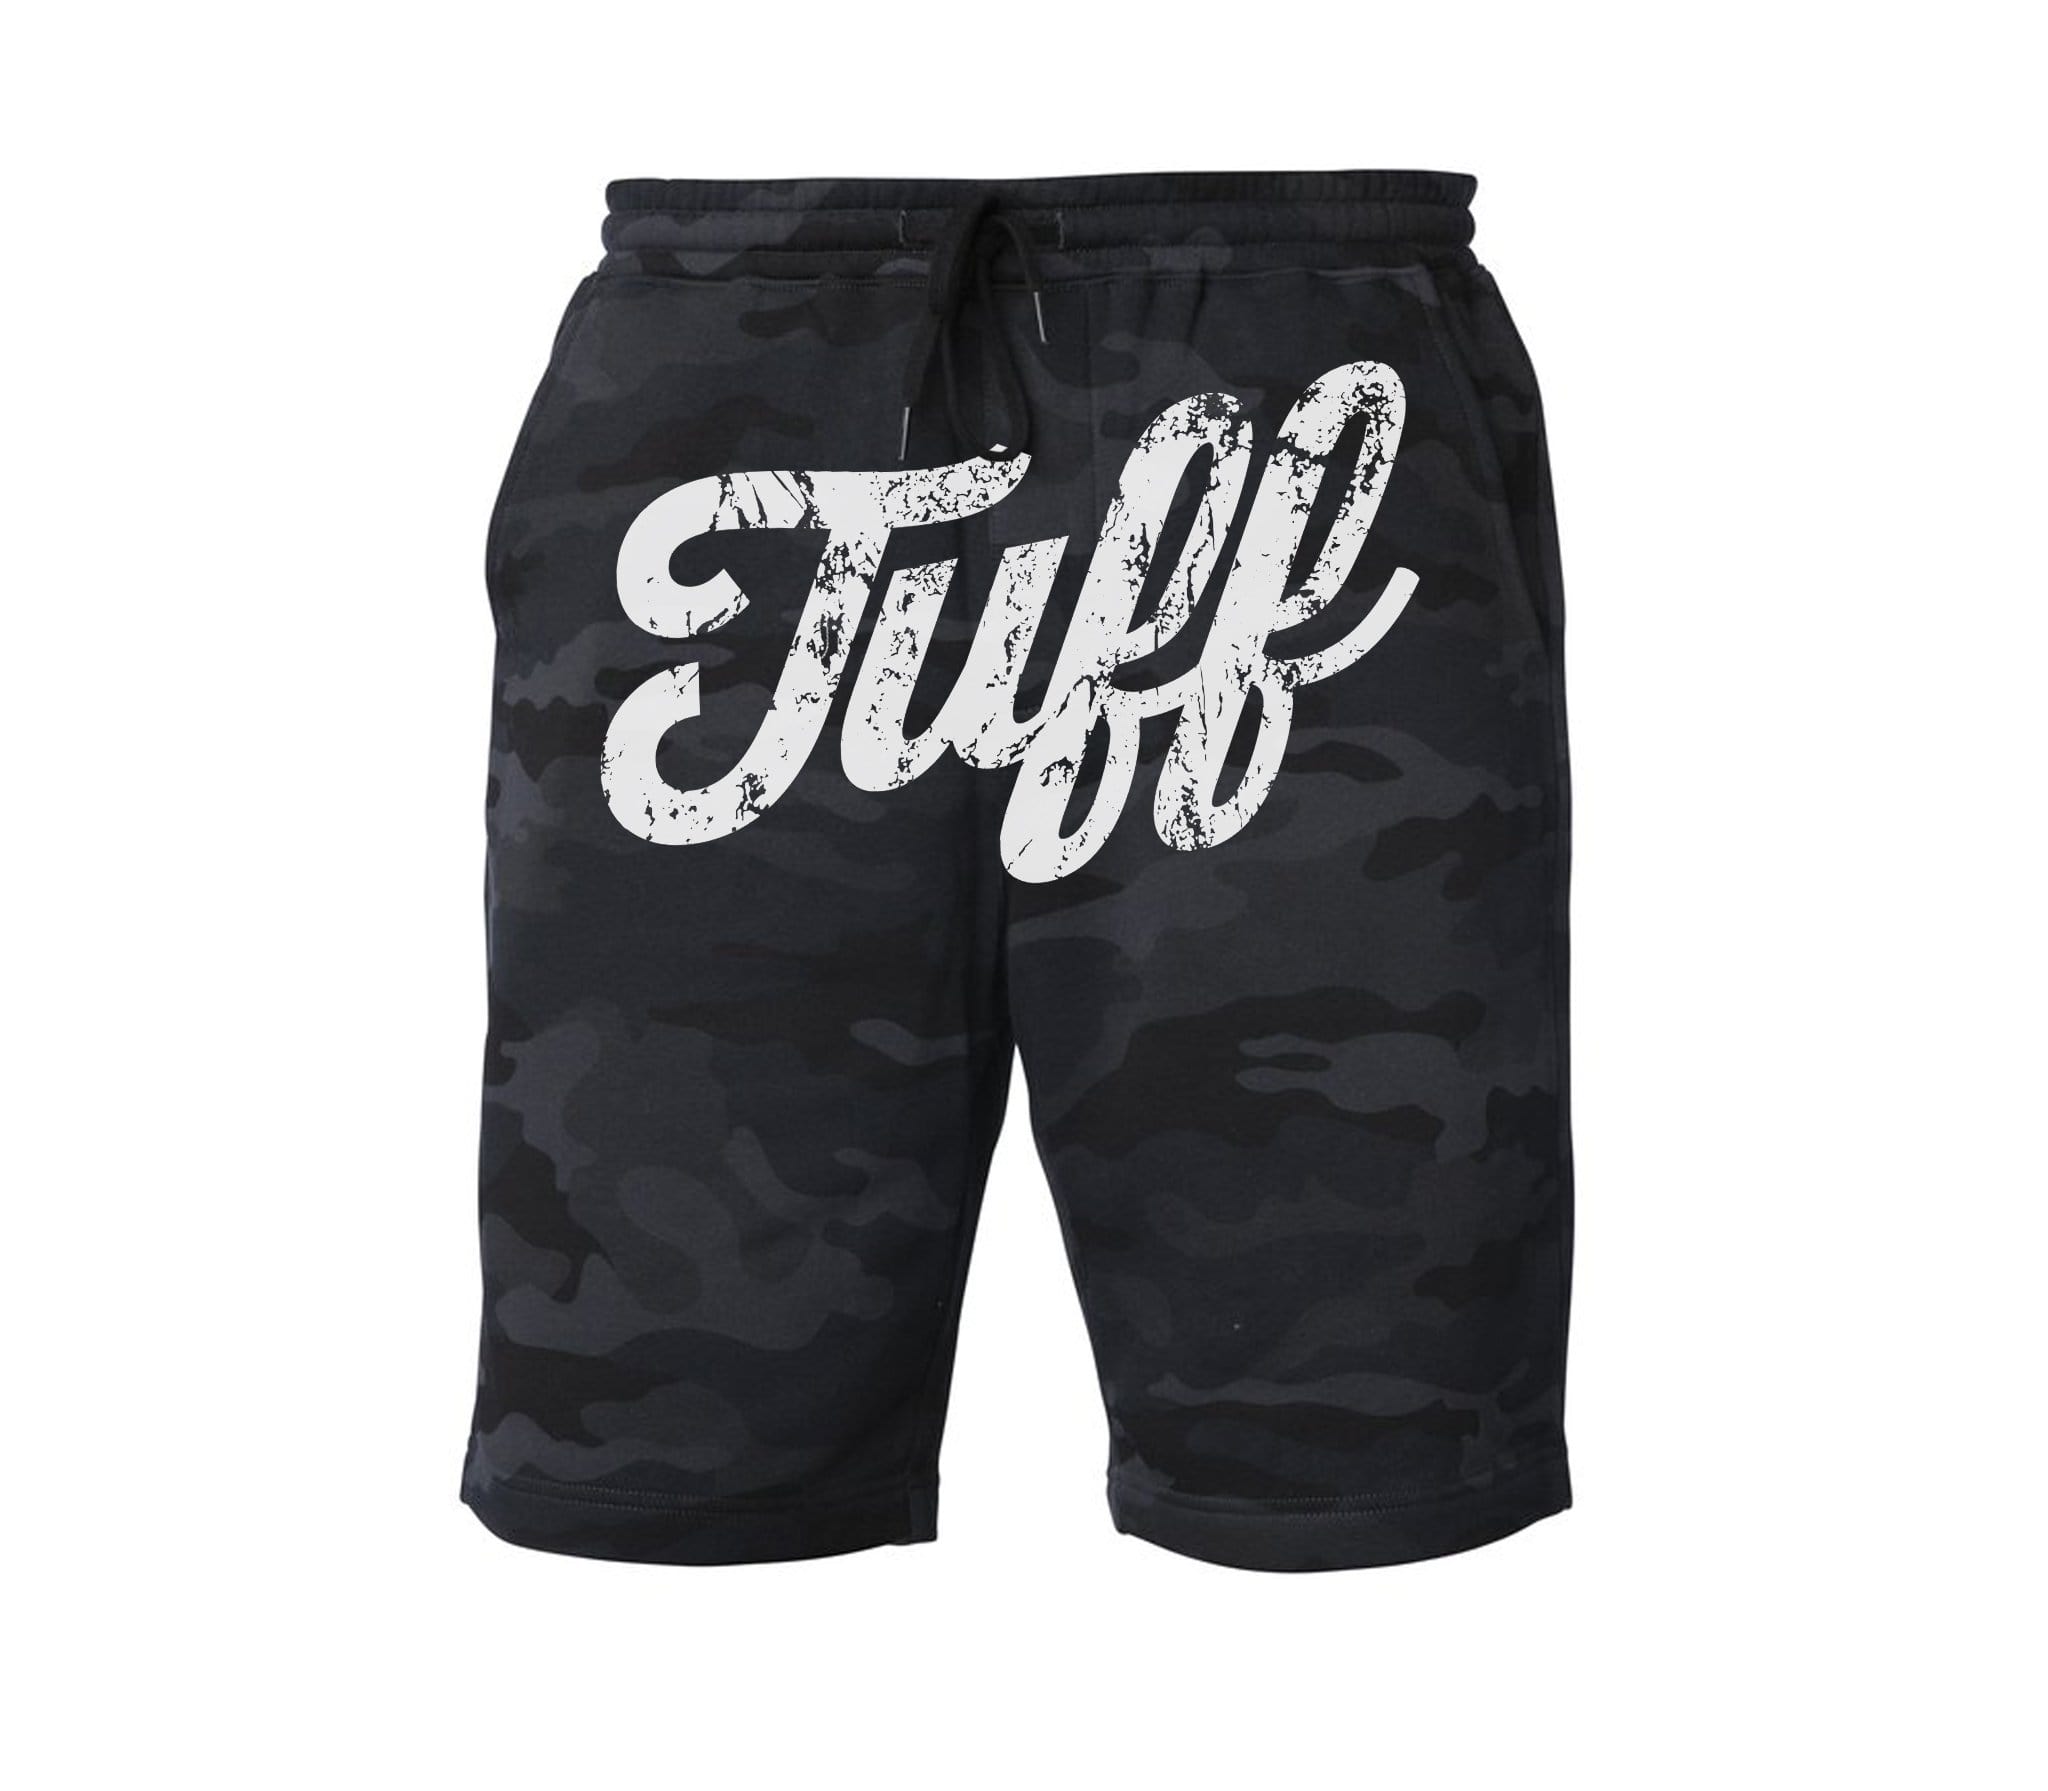 TUFF Front Script Tapered Fleece Shorts